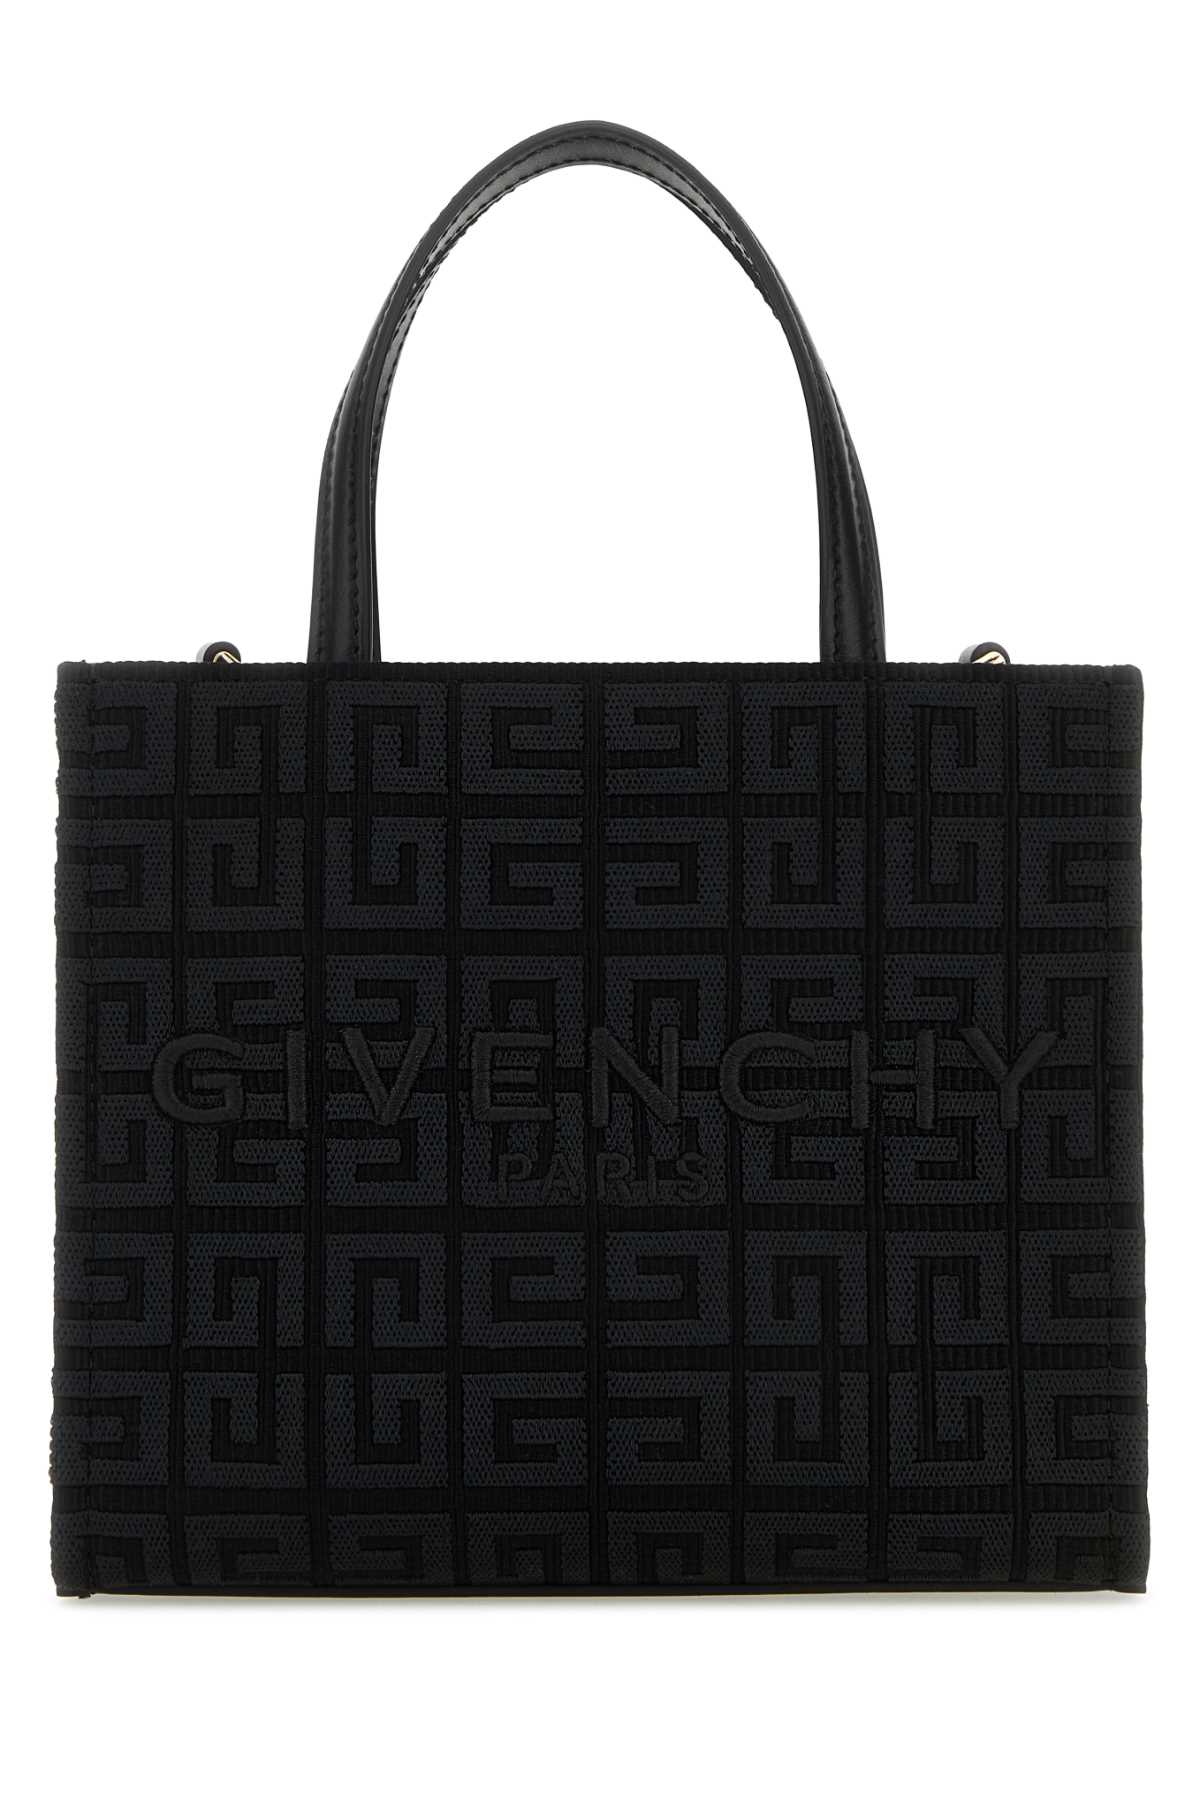 Shop Givenchy Black Canvas G-tote Handbag